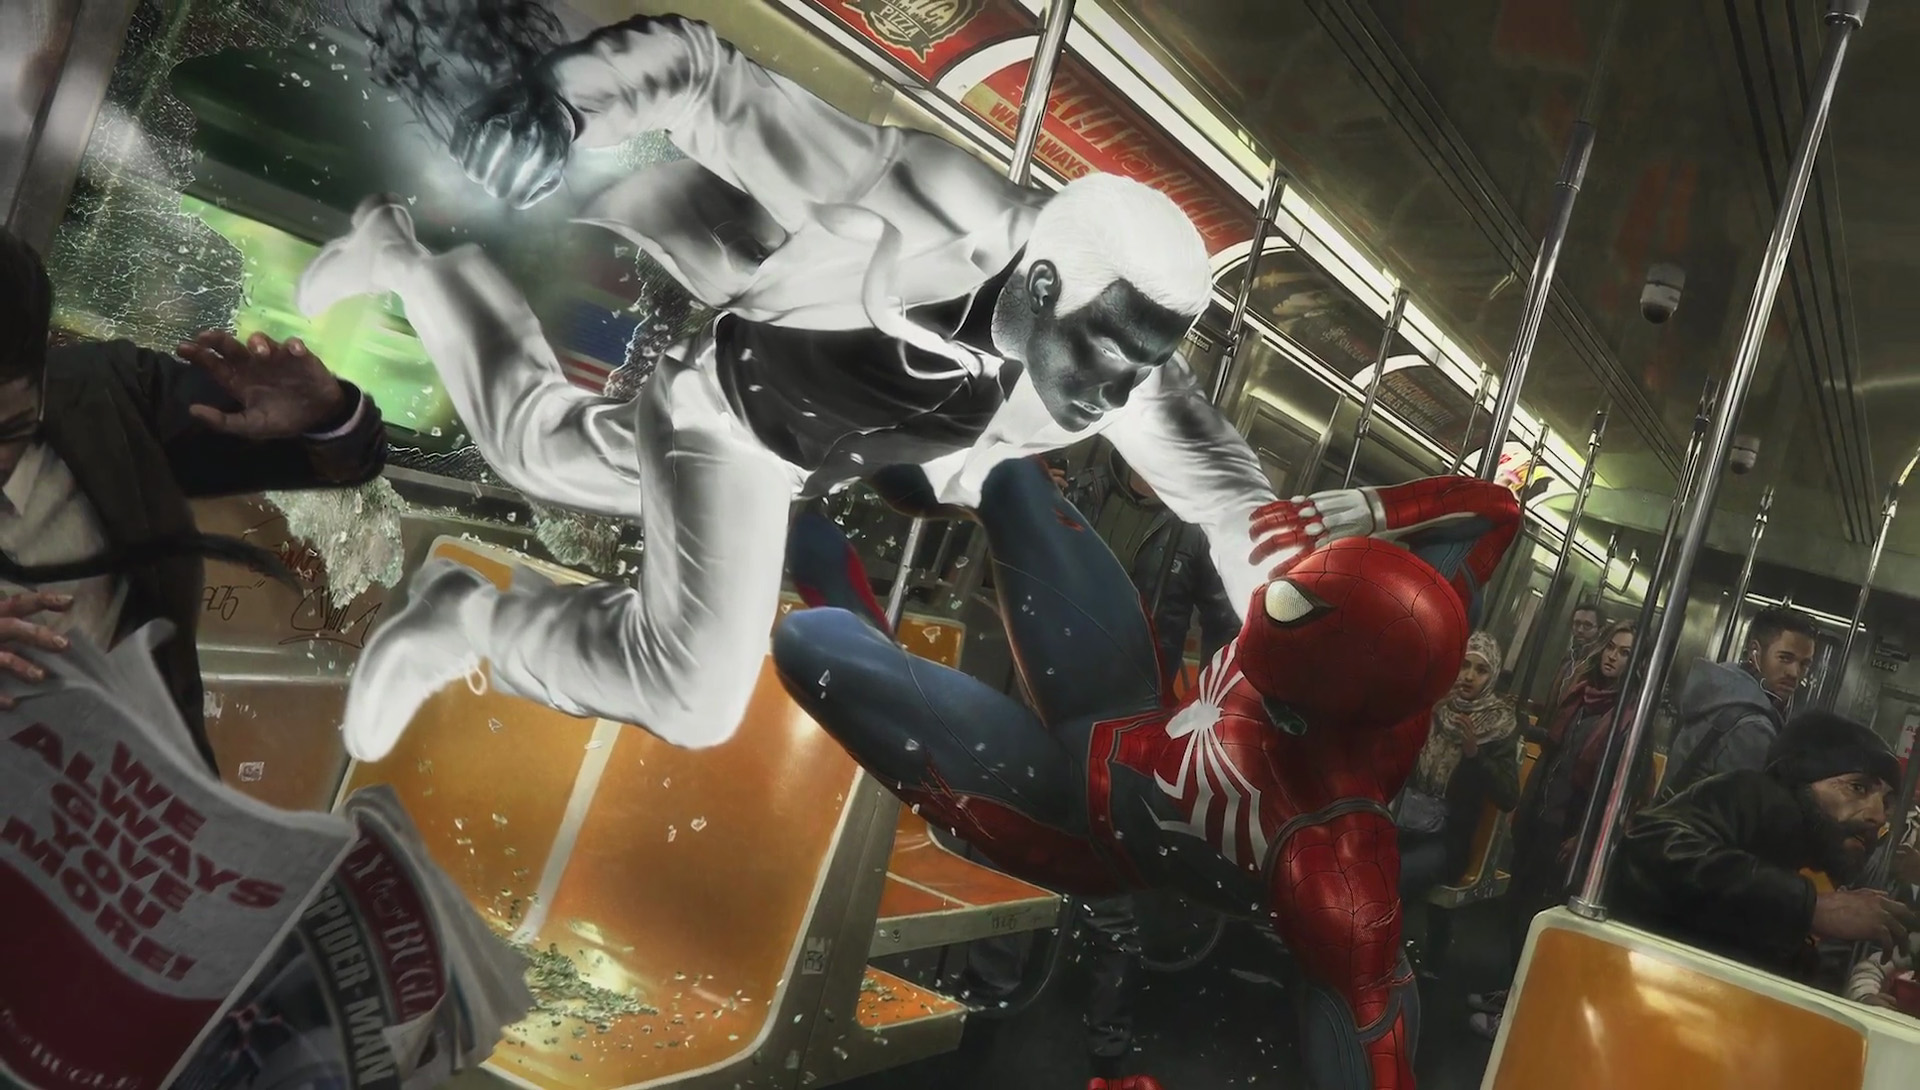 General 1920x1090 video games PlayStation 4 Spider-Man concept art train subway glass